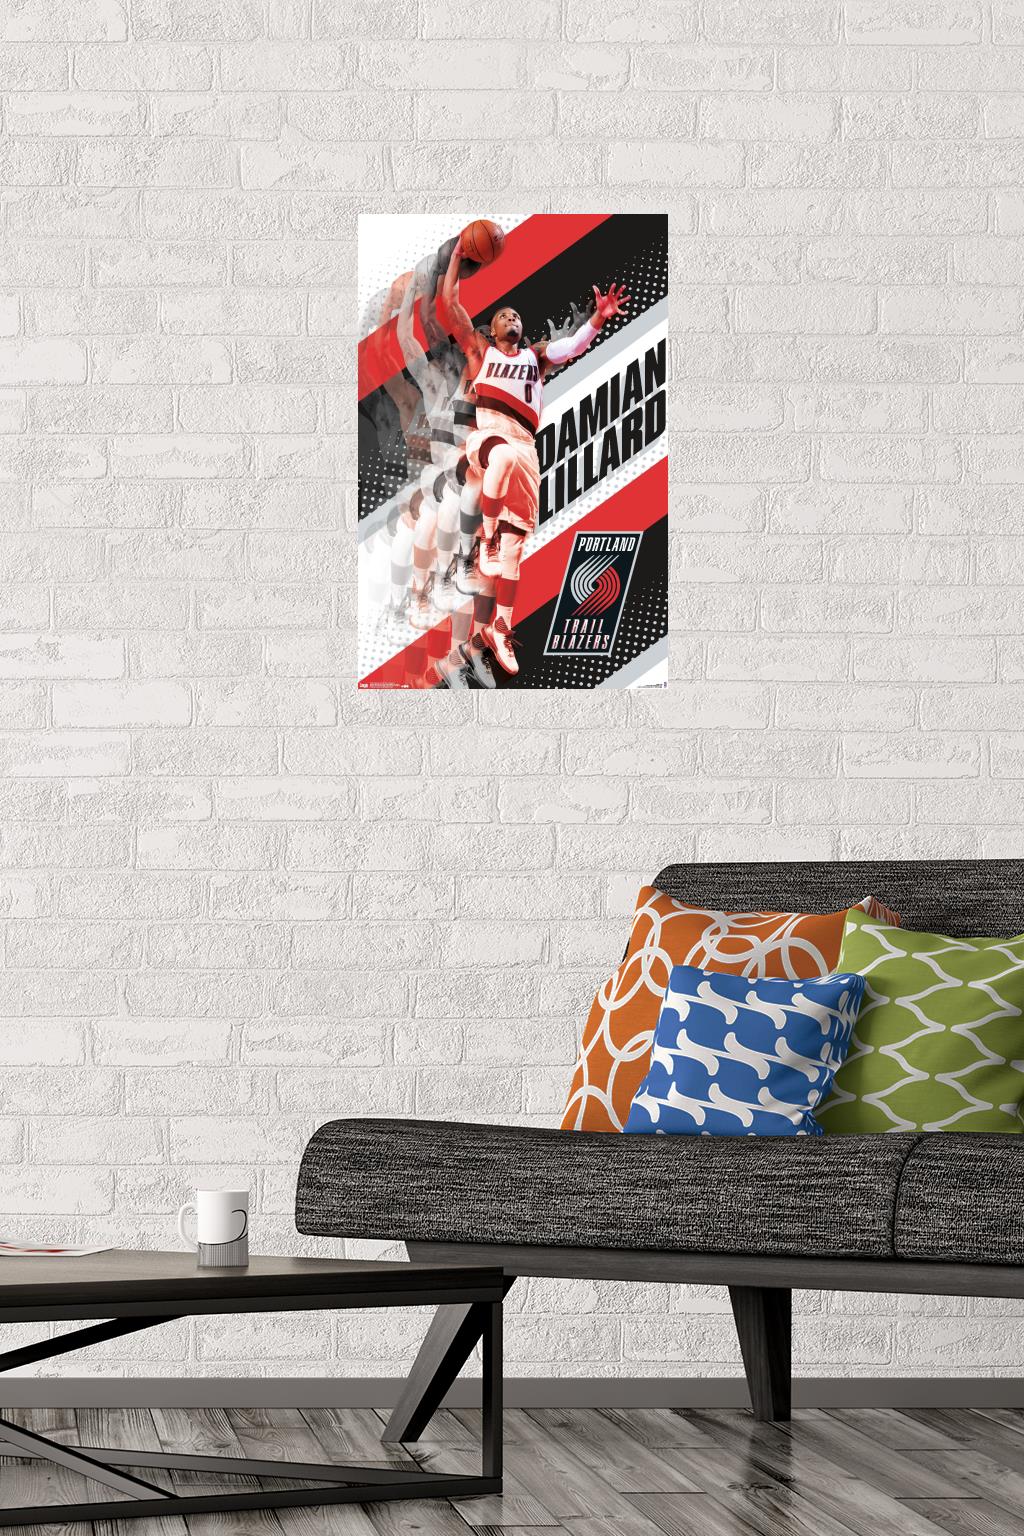 NBA Portland Trail Blazers - Damian Lillard 17 Wall Poster, 14.725" x 22.375" - image 2 of 5